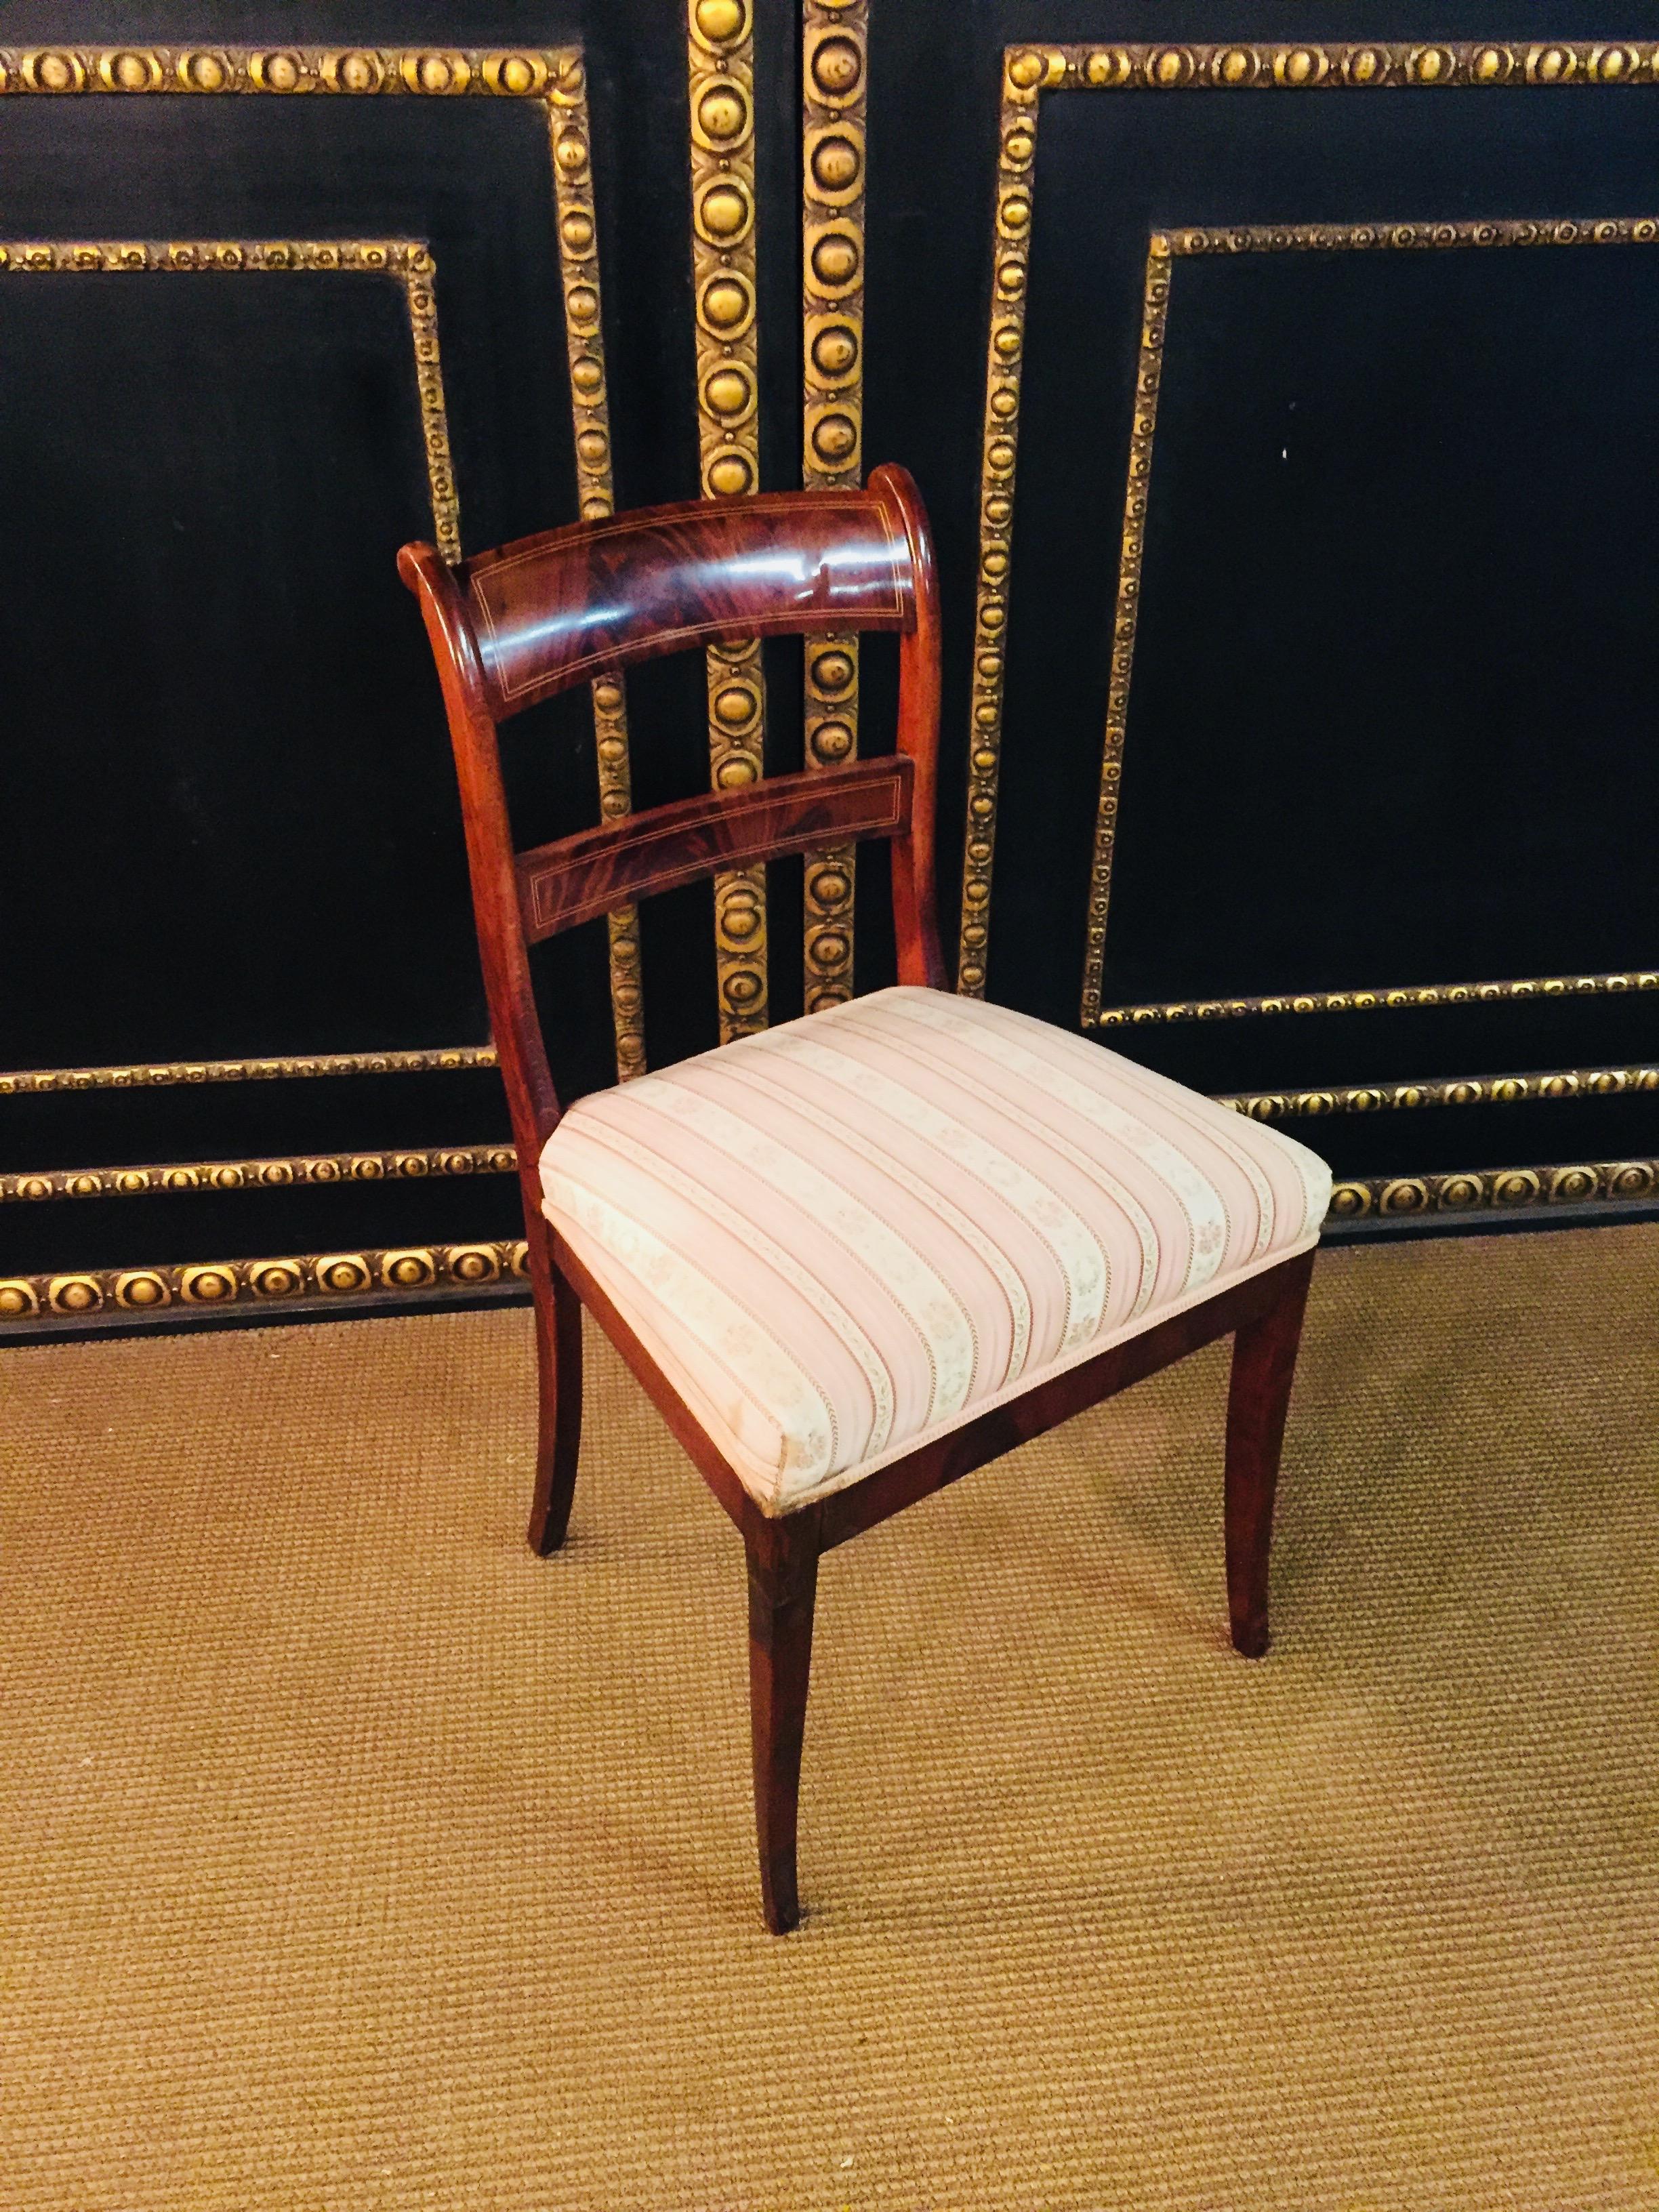 19th Century Elegant Biedermeier Chair circa 1820 Mahogany